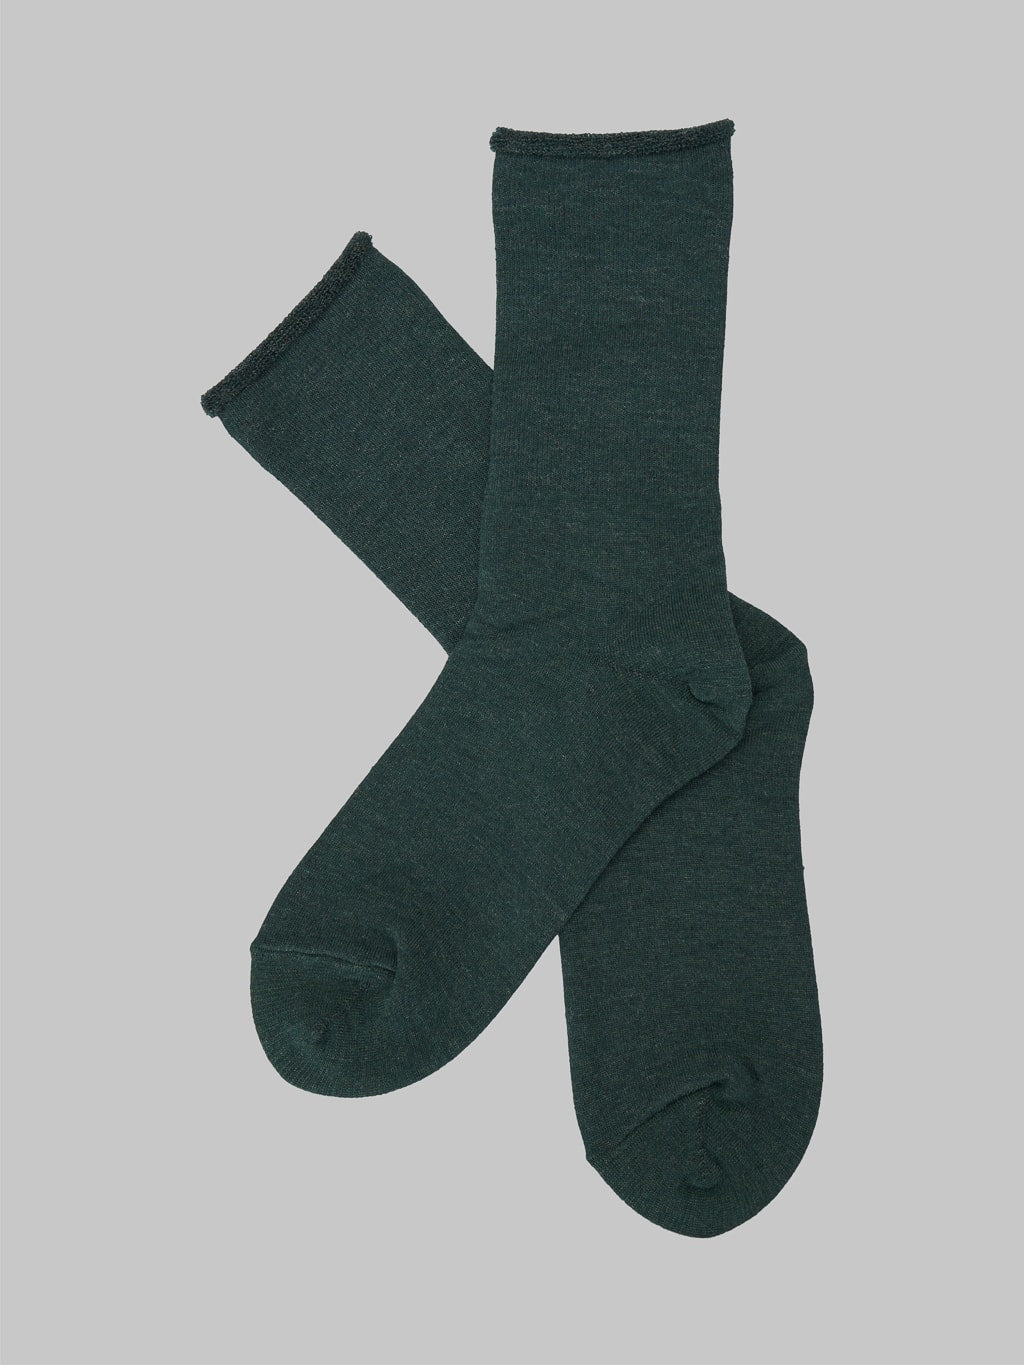 rototo city socks dark green made in japan